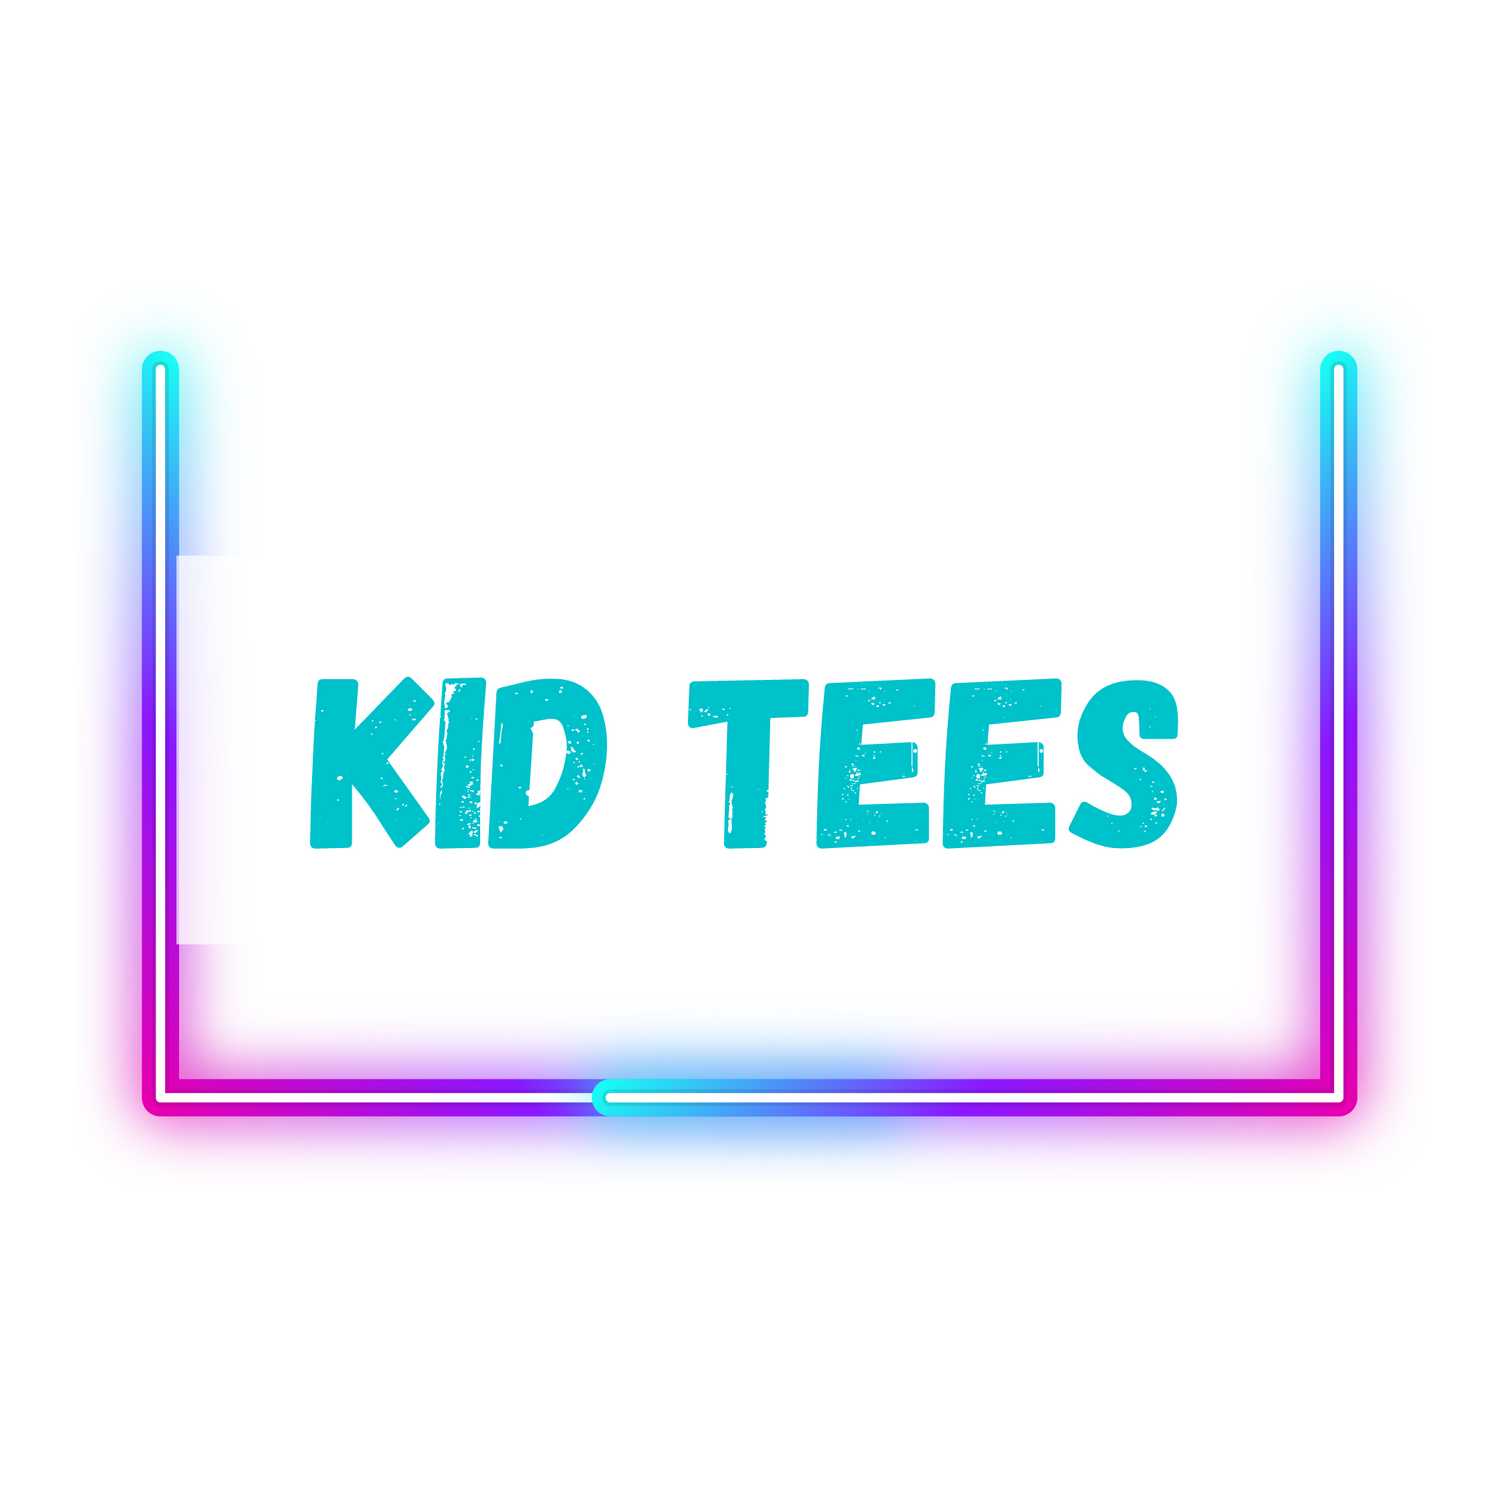 Kid Shirts